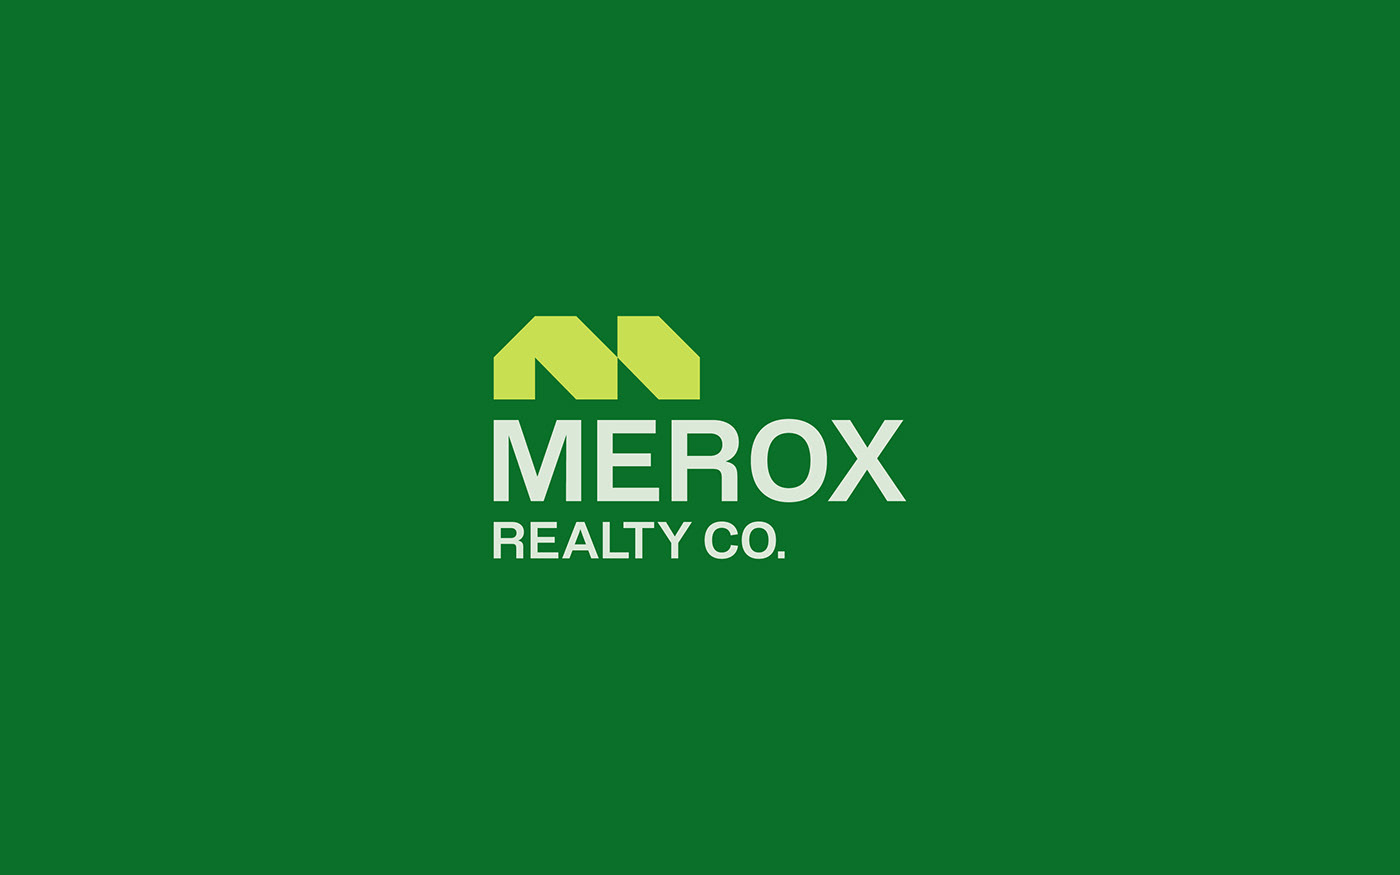 
MEROX REALTY CO. | Real Estate Branding